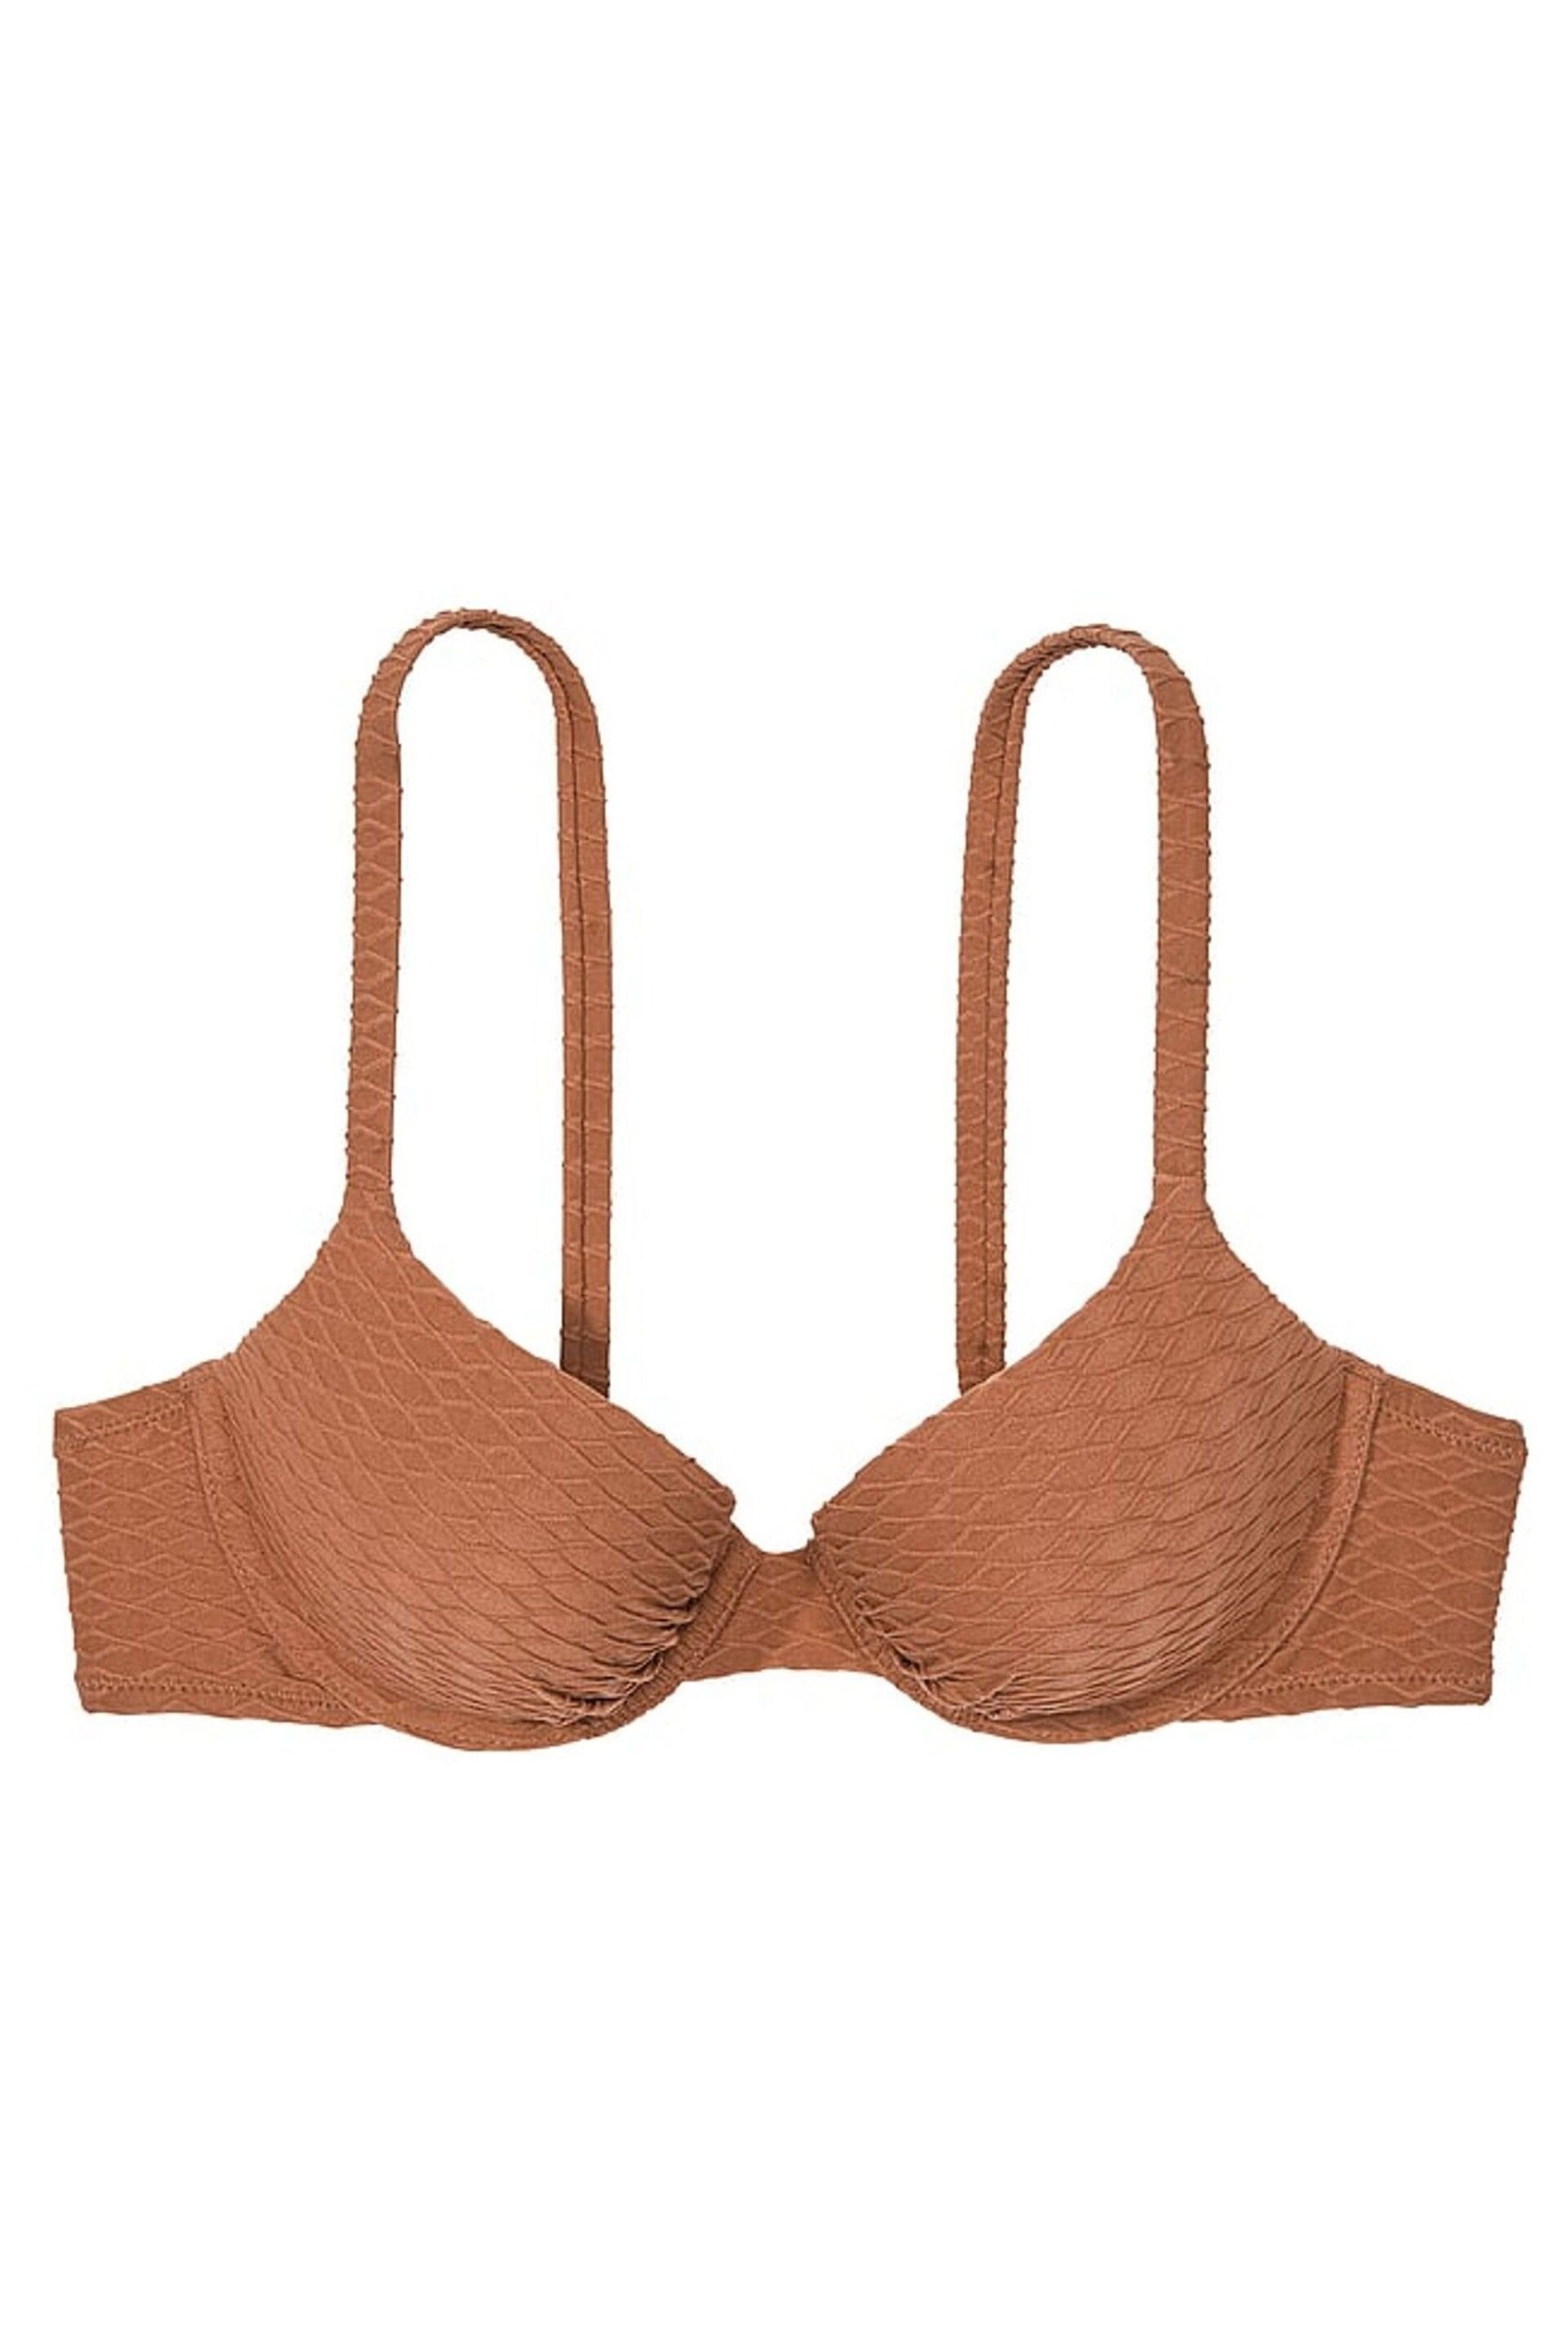 Victoria's Secret Caramel Brown Fishnet Padded Swim Bikini Top - Image 3 of 3